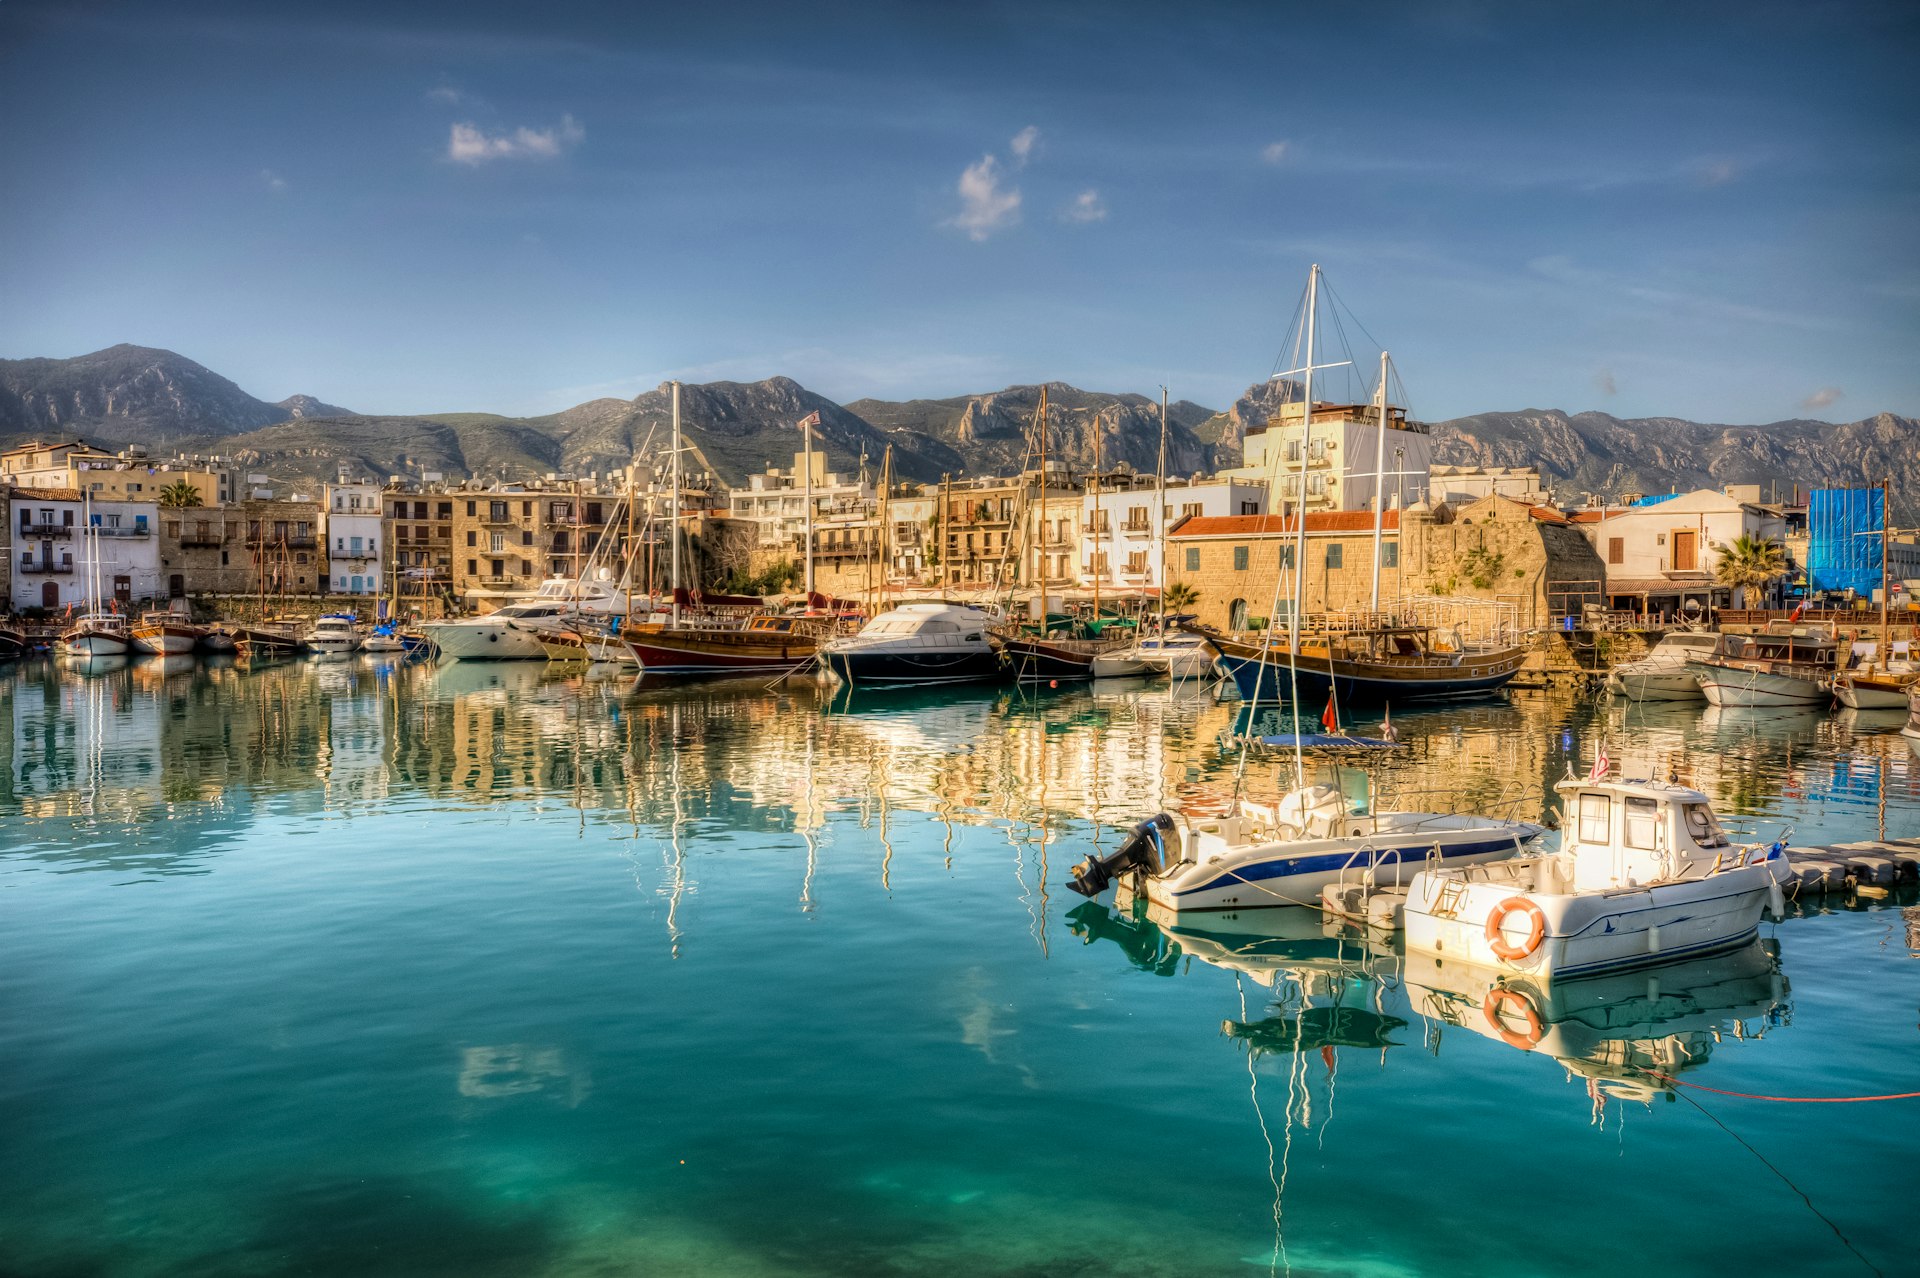 The ancient harbor at Kyrenia, North Cyprus